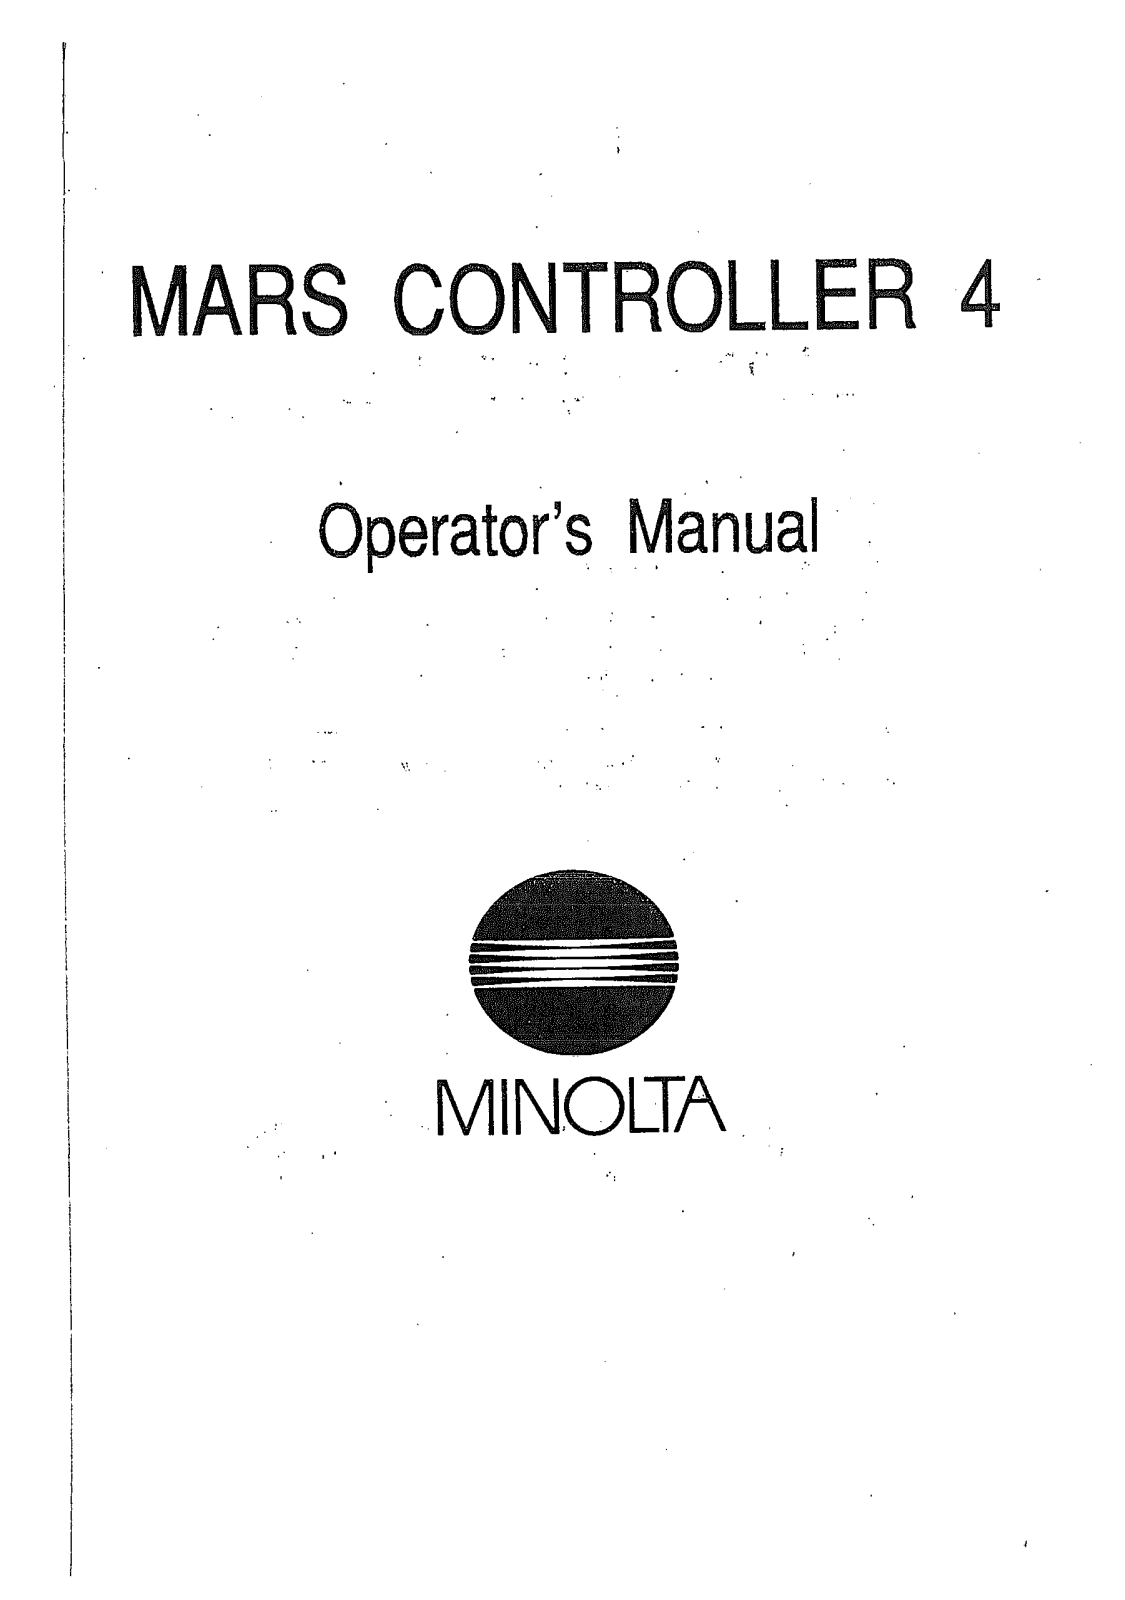 Konica Minolta MICROSP 2000 MARS CONTROLLER 4, RFC-20A MARS CONTROLLER 4, RFC-22A MARS CONTROLLER 4, RFC-15A MARS CONTROLLER 4, MS3000 Manual